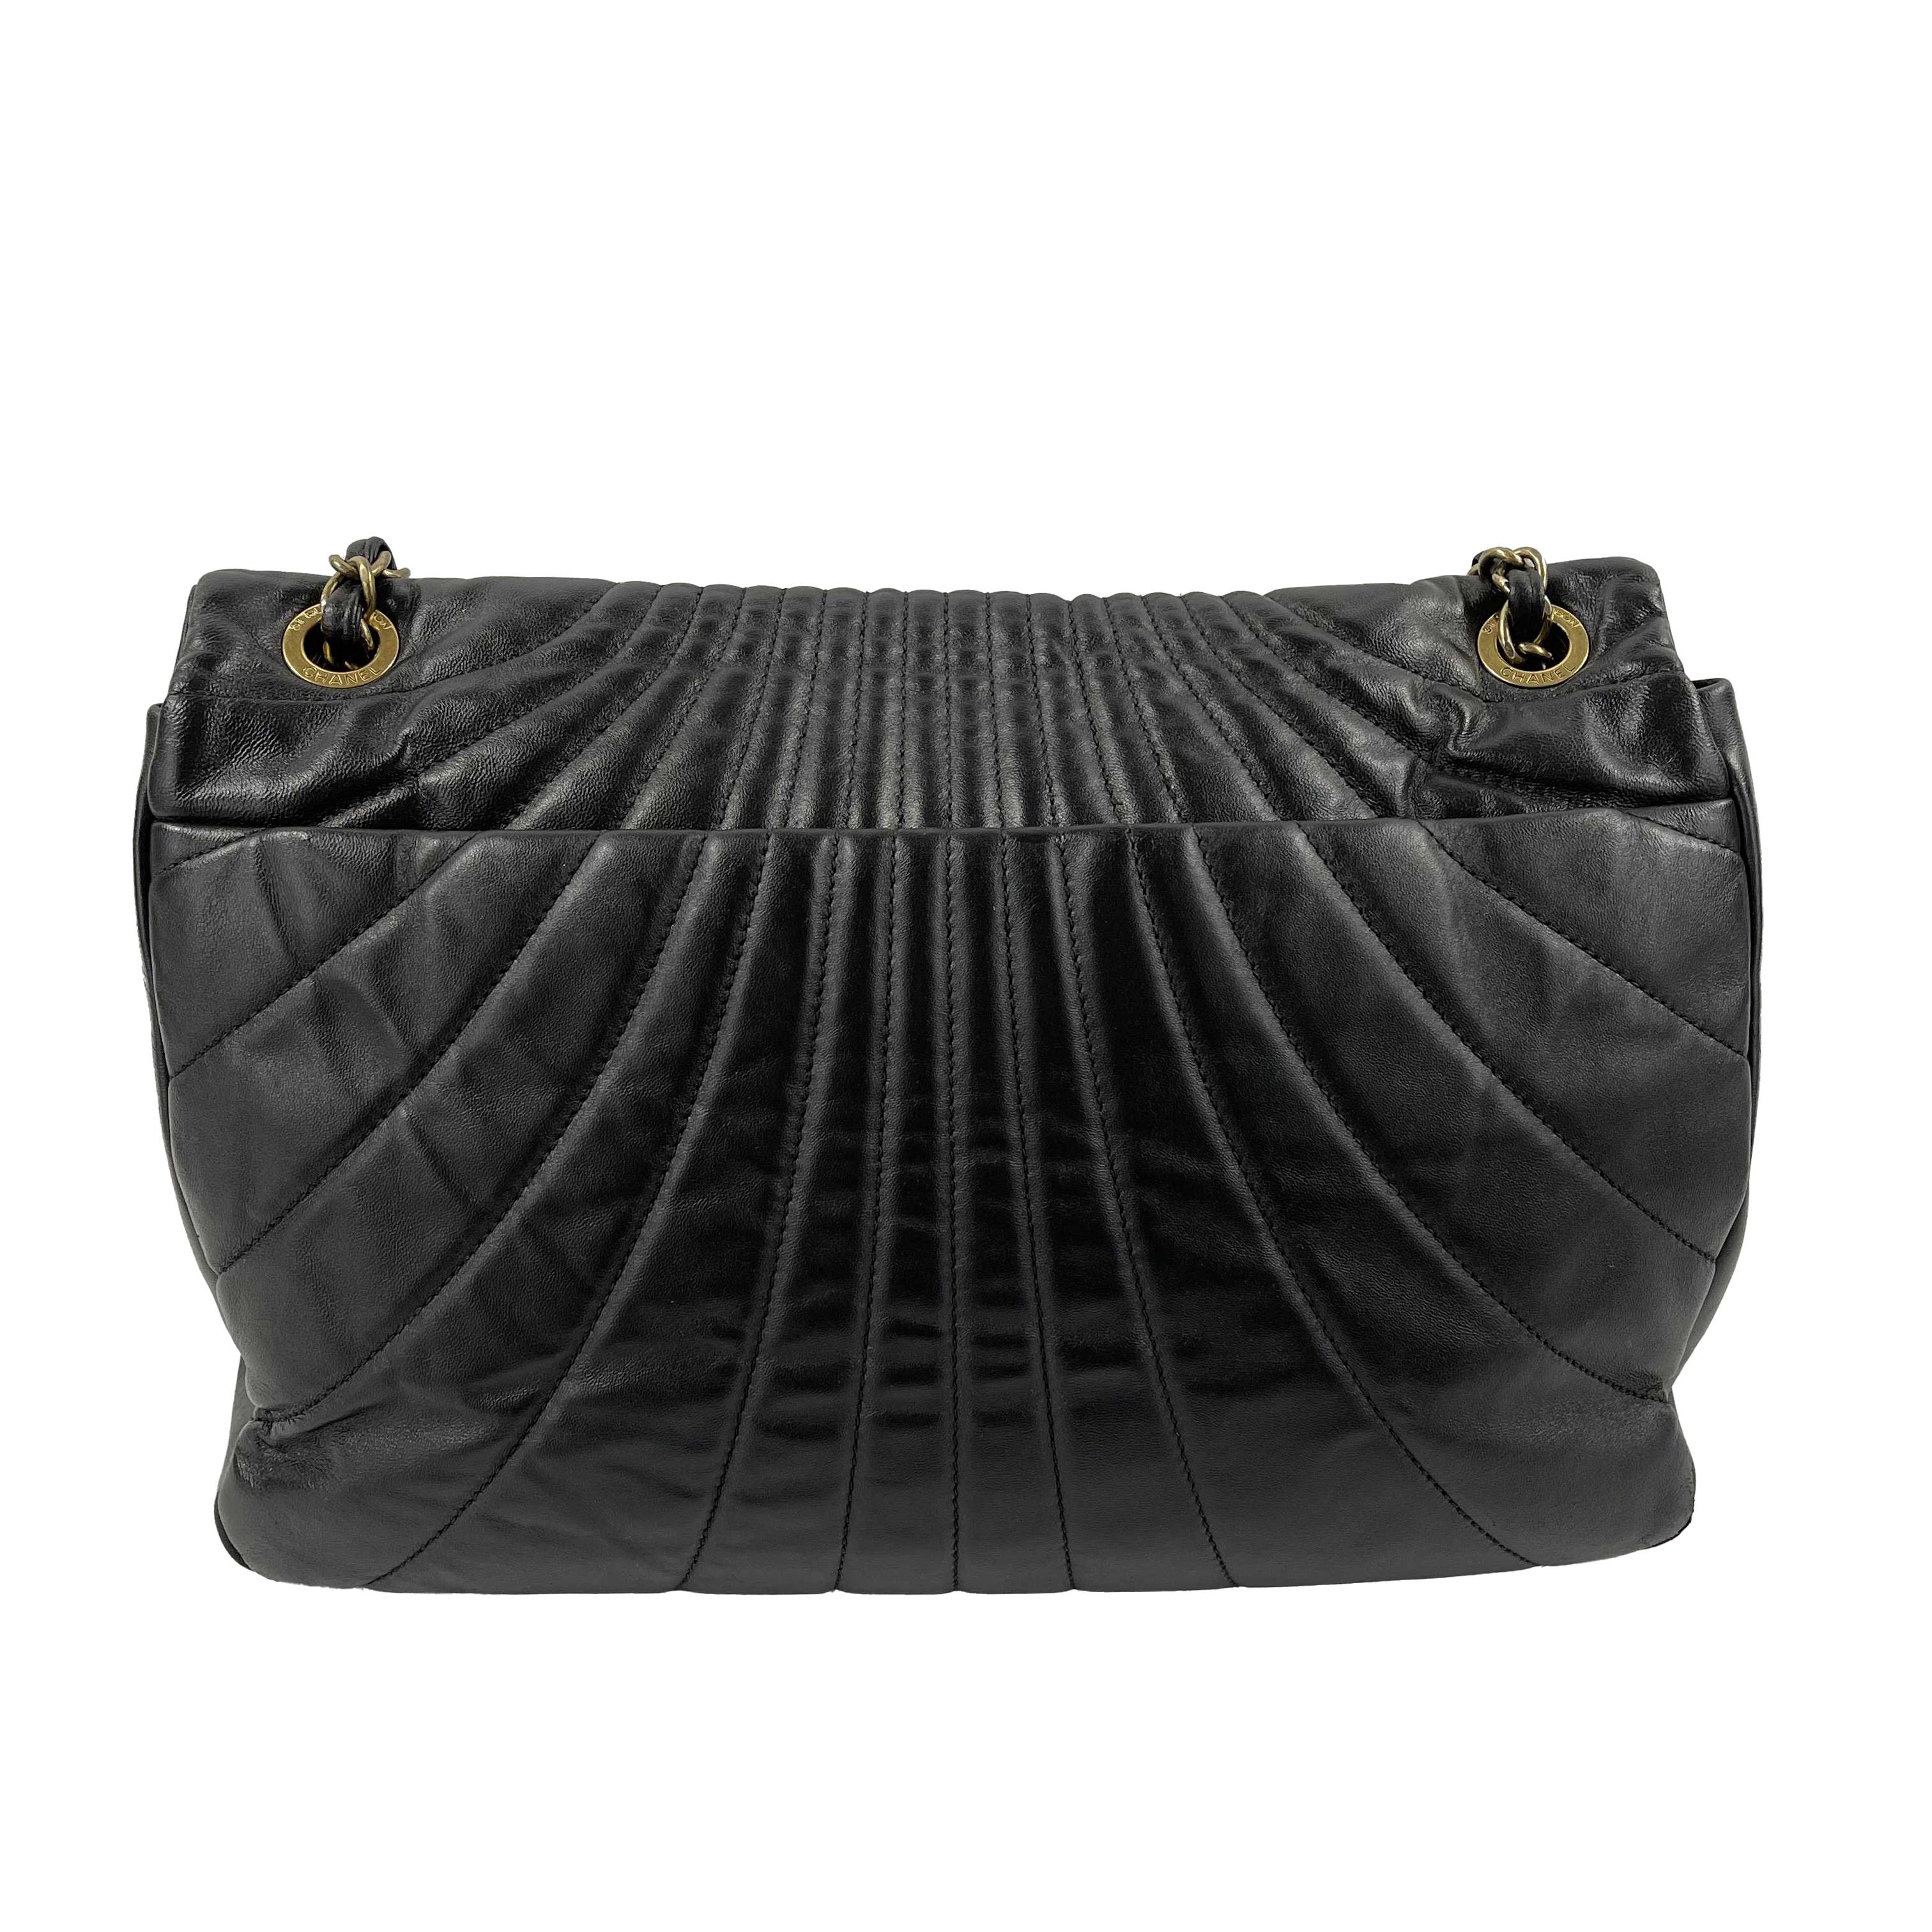 CHANEL - Wave Quilted Black Calfskin Leather Maxi Flap - Gold-tone Shoulder Bag

Measurements

Width: 14